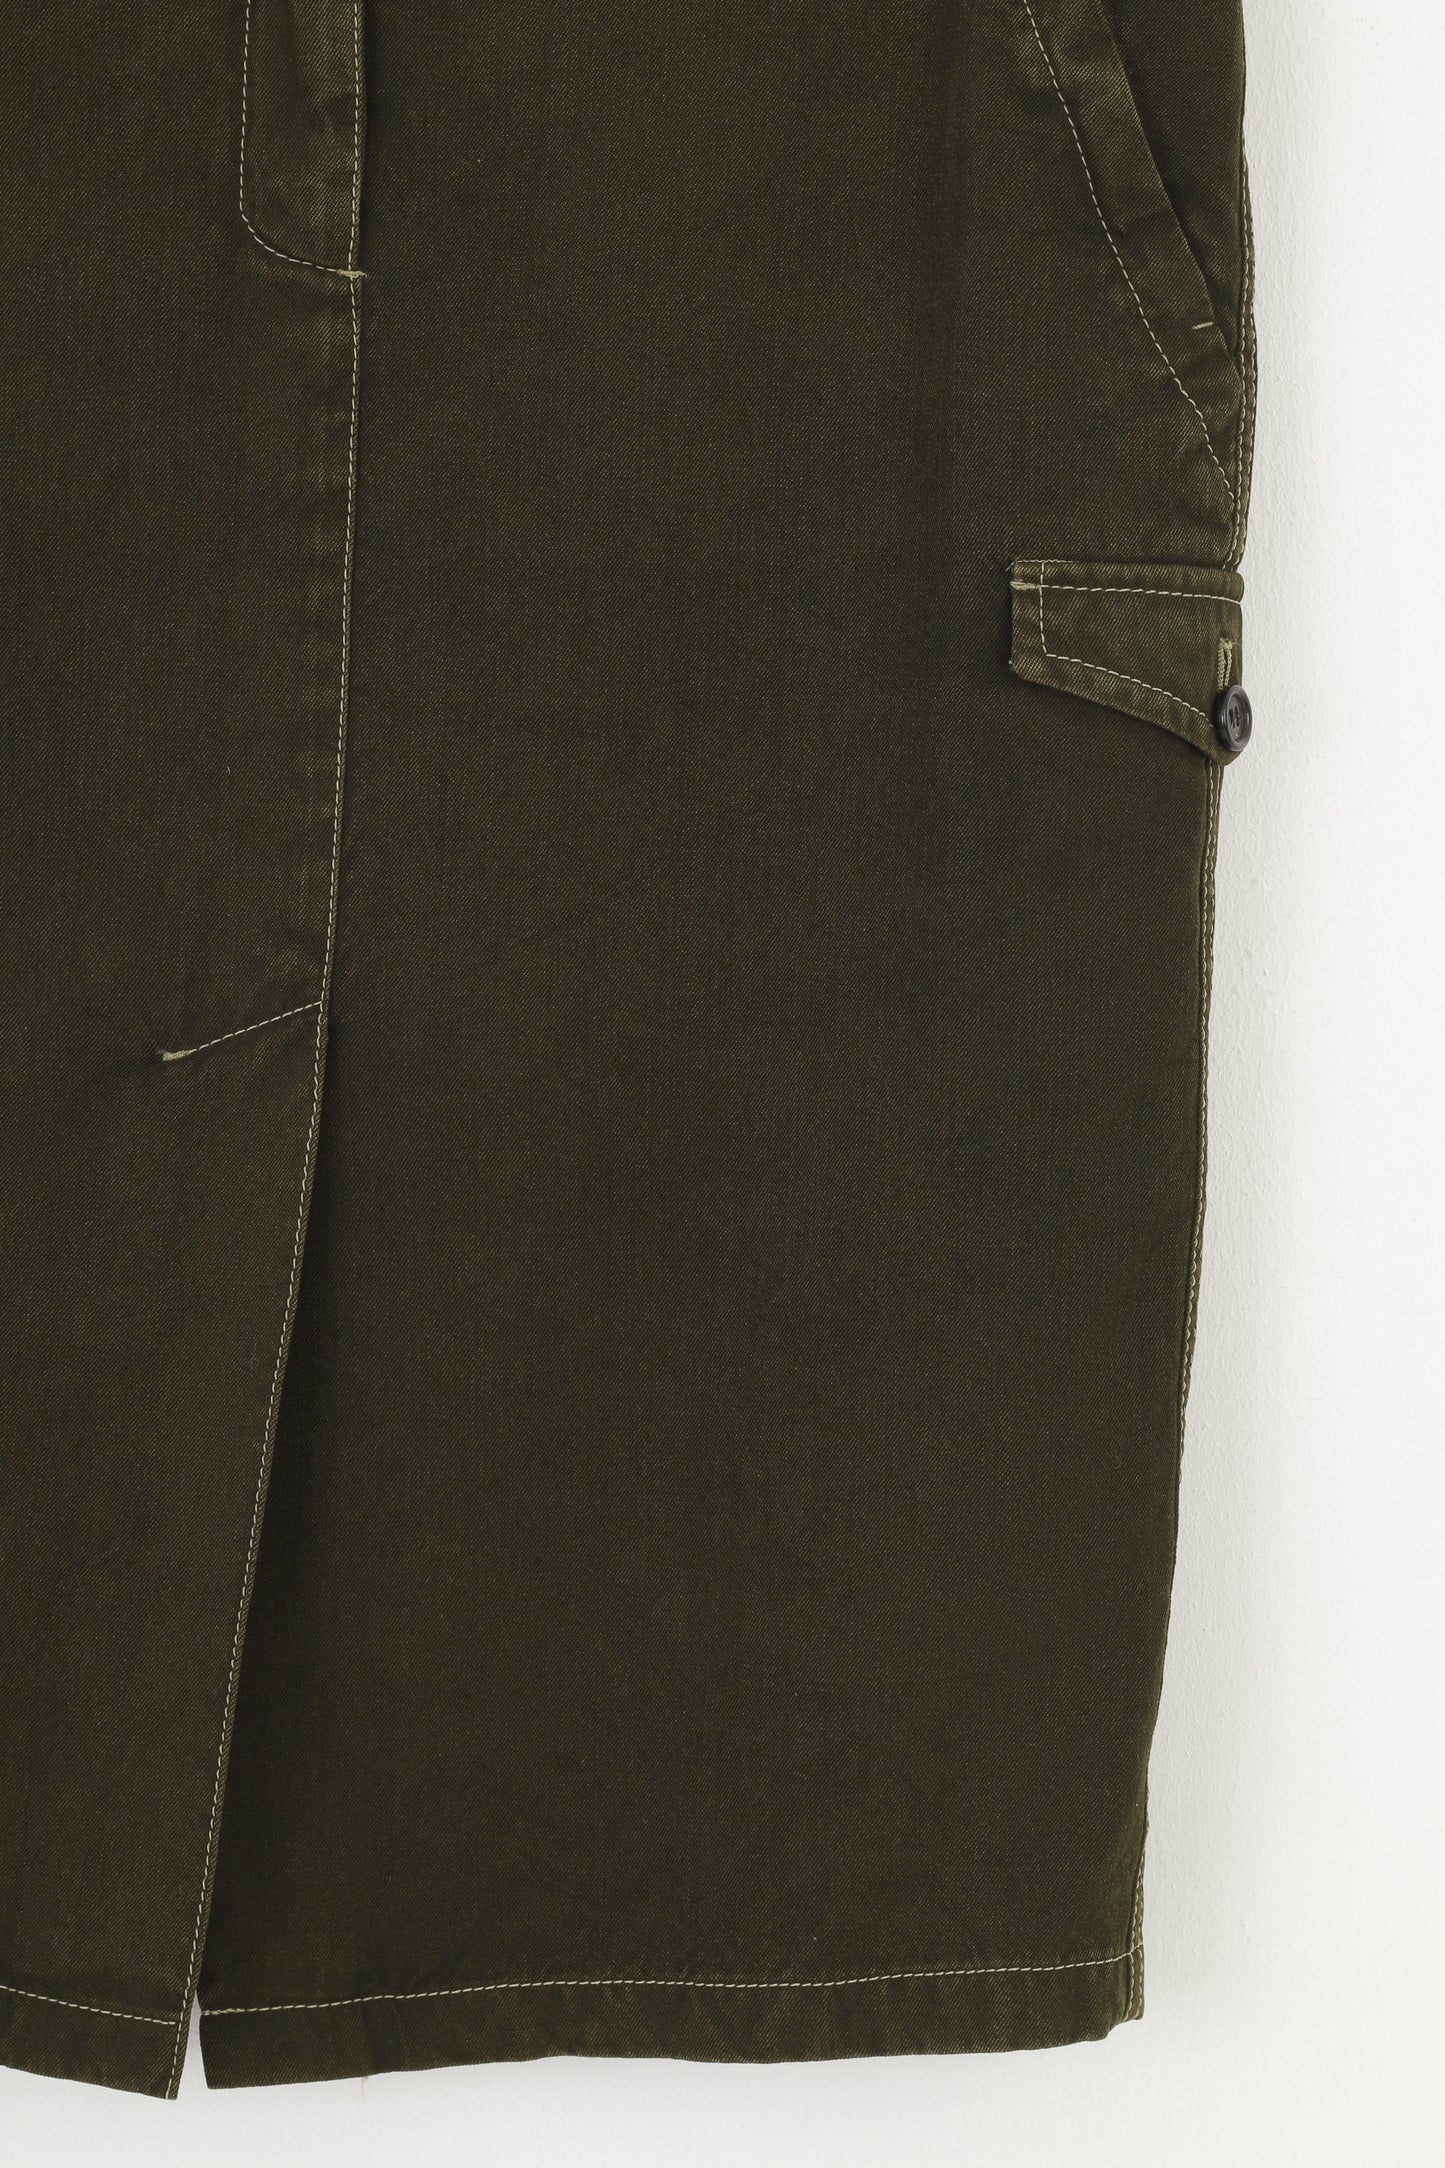 Prada Woman 42 L Skirt Khaki Zipper Midi Pockets Wool Vintage